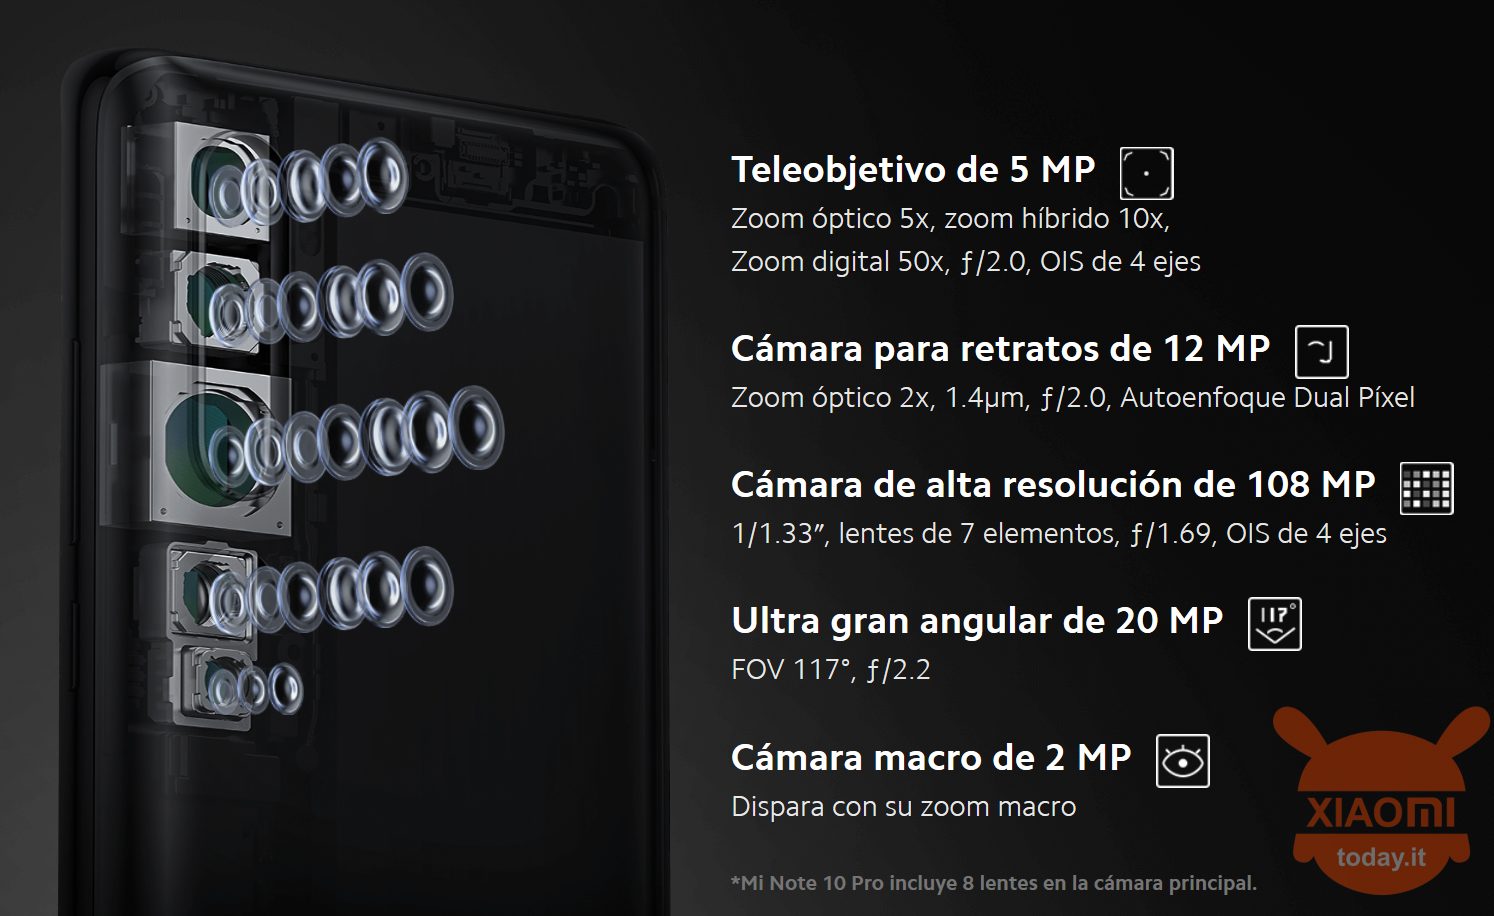 Mi 10丨Xiaomi España丨 - España